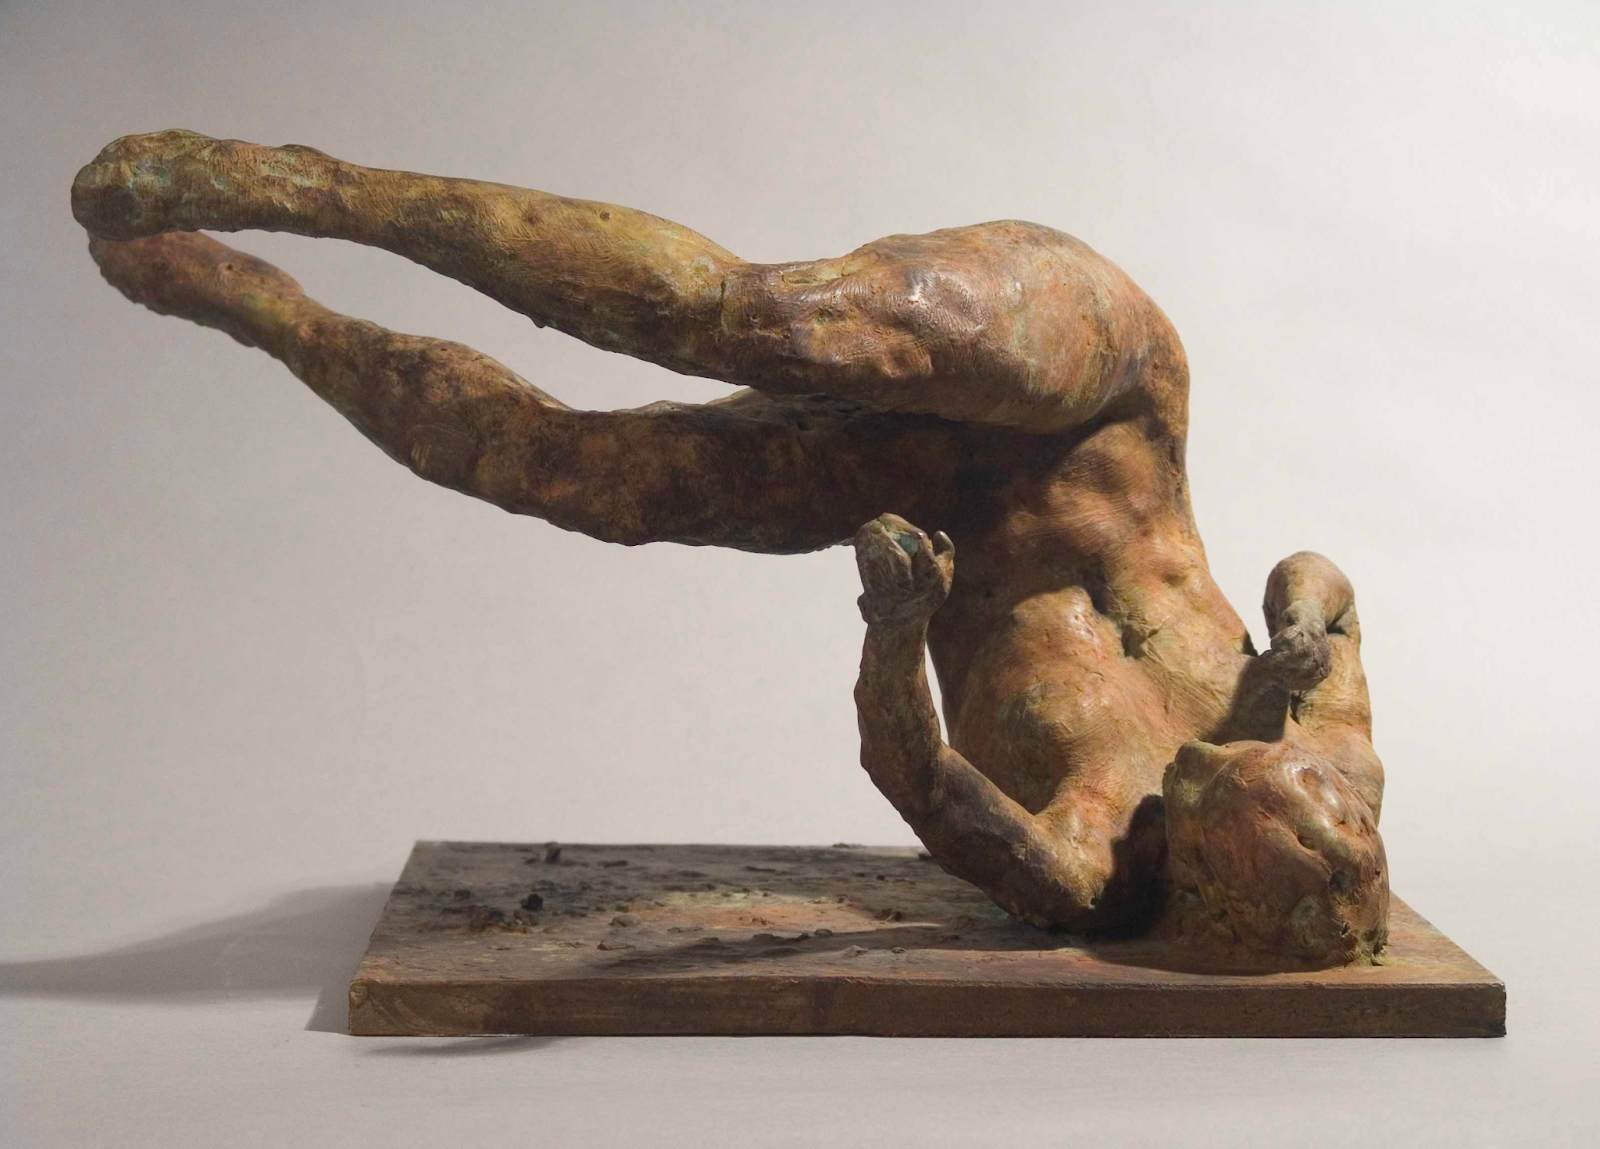 Eric Fischl's sculpture, The Tumbling Woman